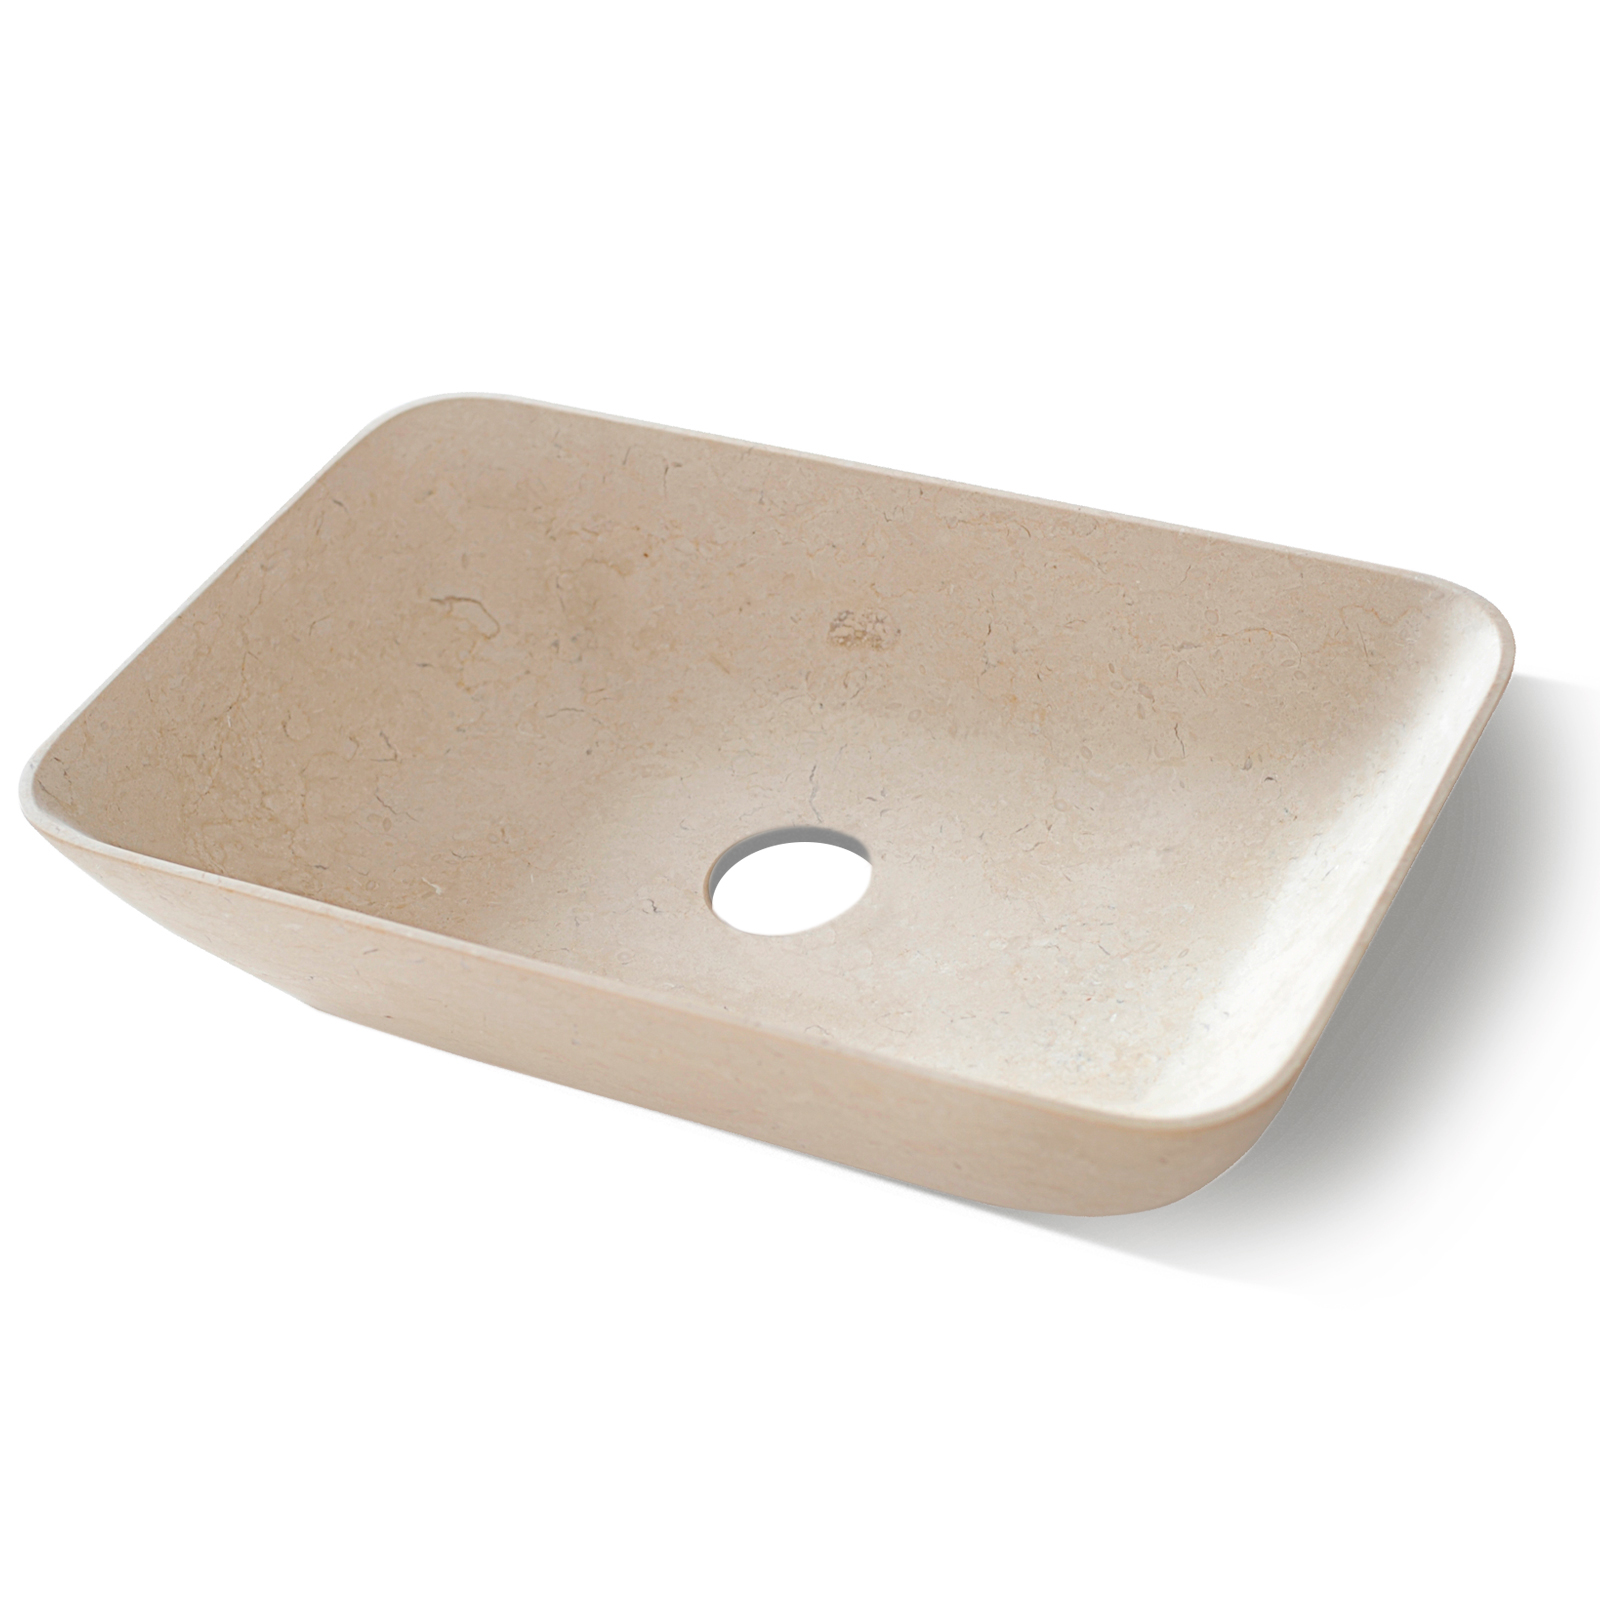 Stone-like-marble-countertop-washbasin-67x47-or-55x35-174578_1542641763_268